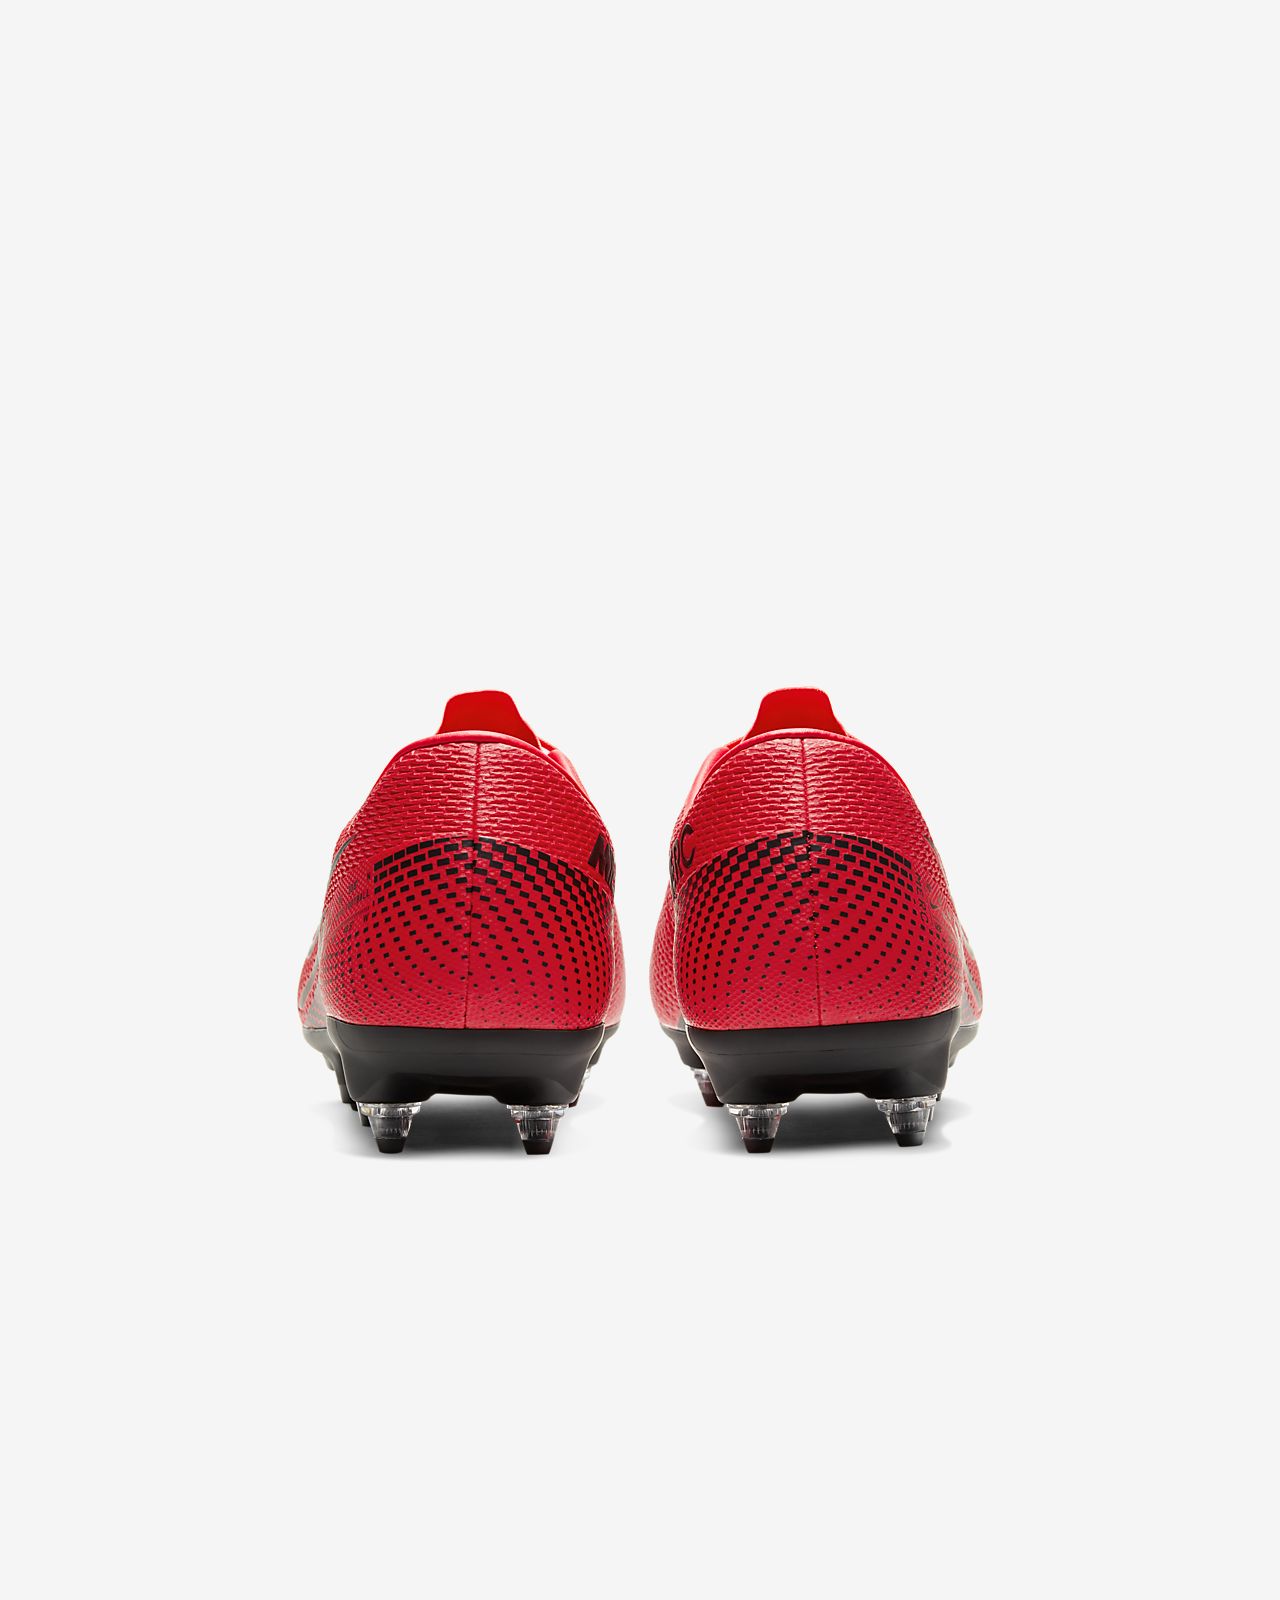 blue vapor 13 Nike Football Shoes Cleats for sale